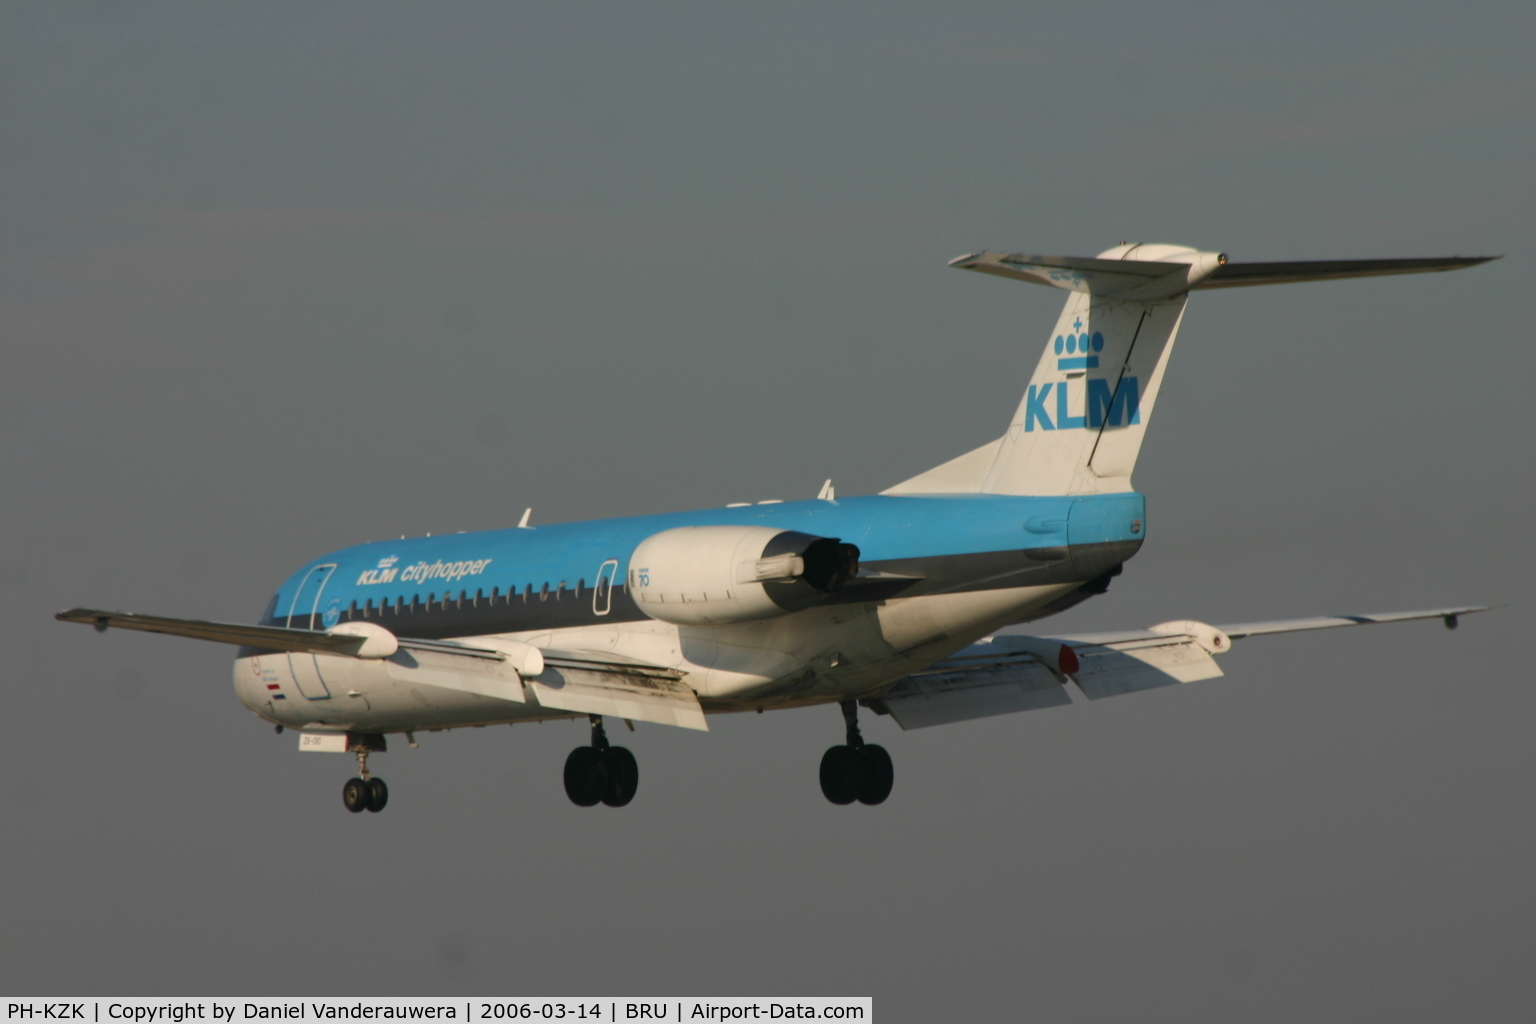 PH-KZK, 1997 Fokker 70 (F-28-0070) C/N 11581, short to land on rnw 25L